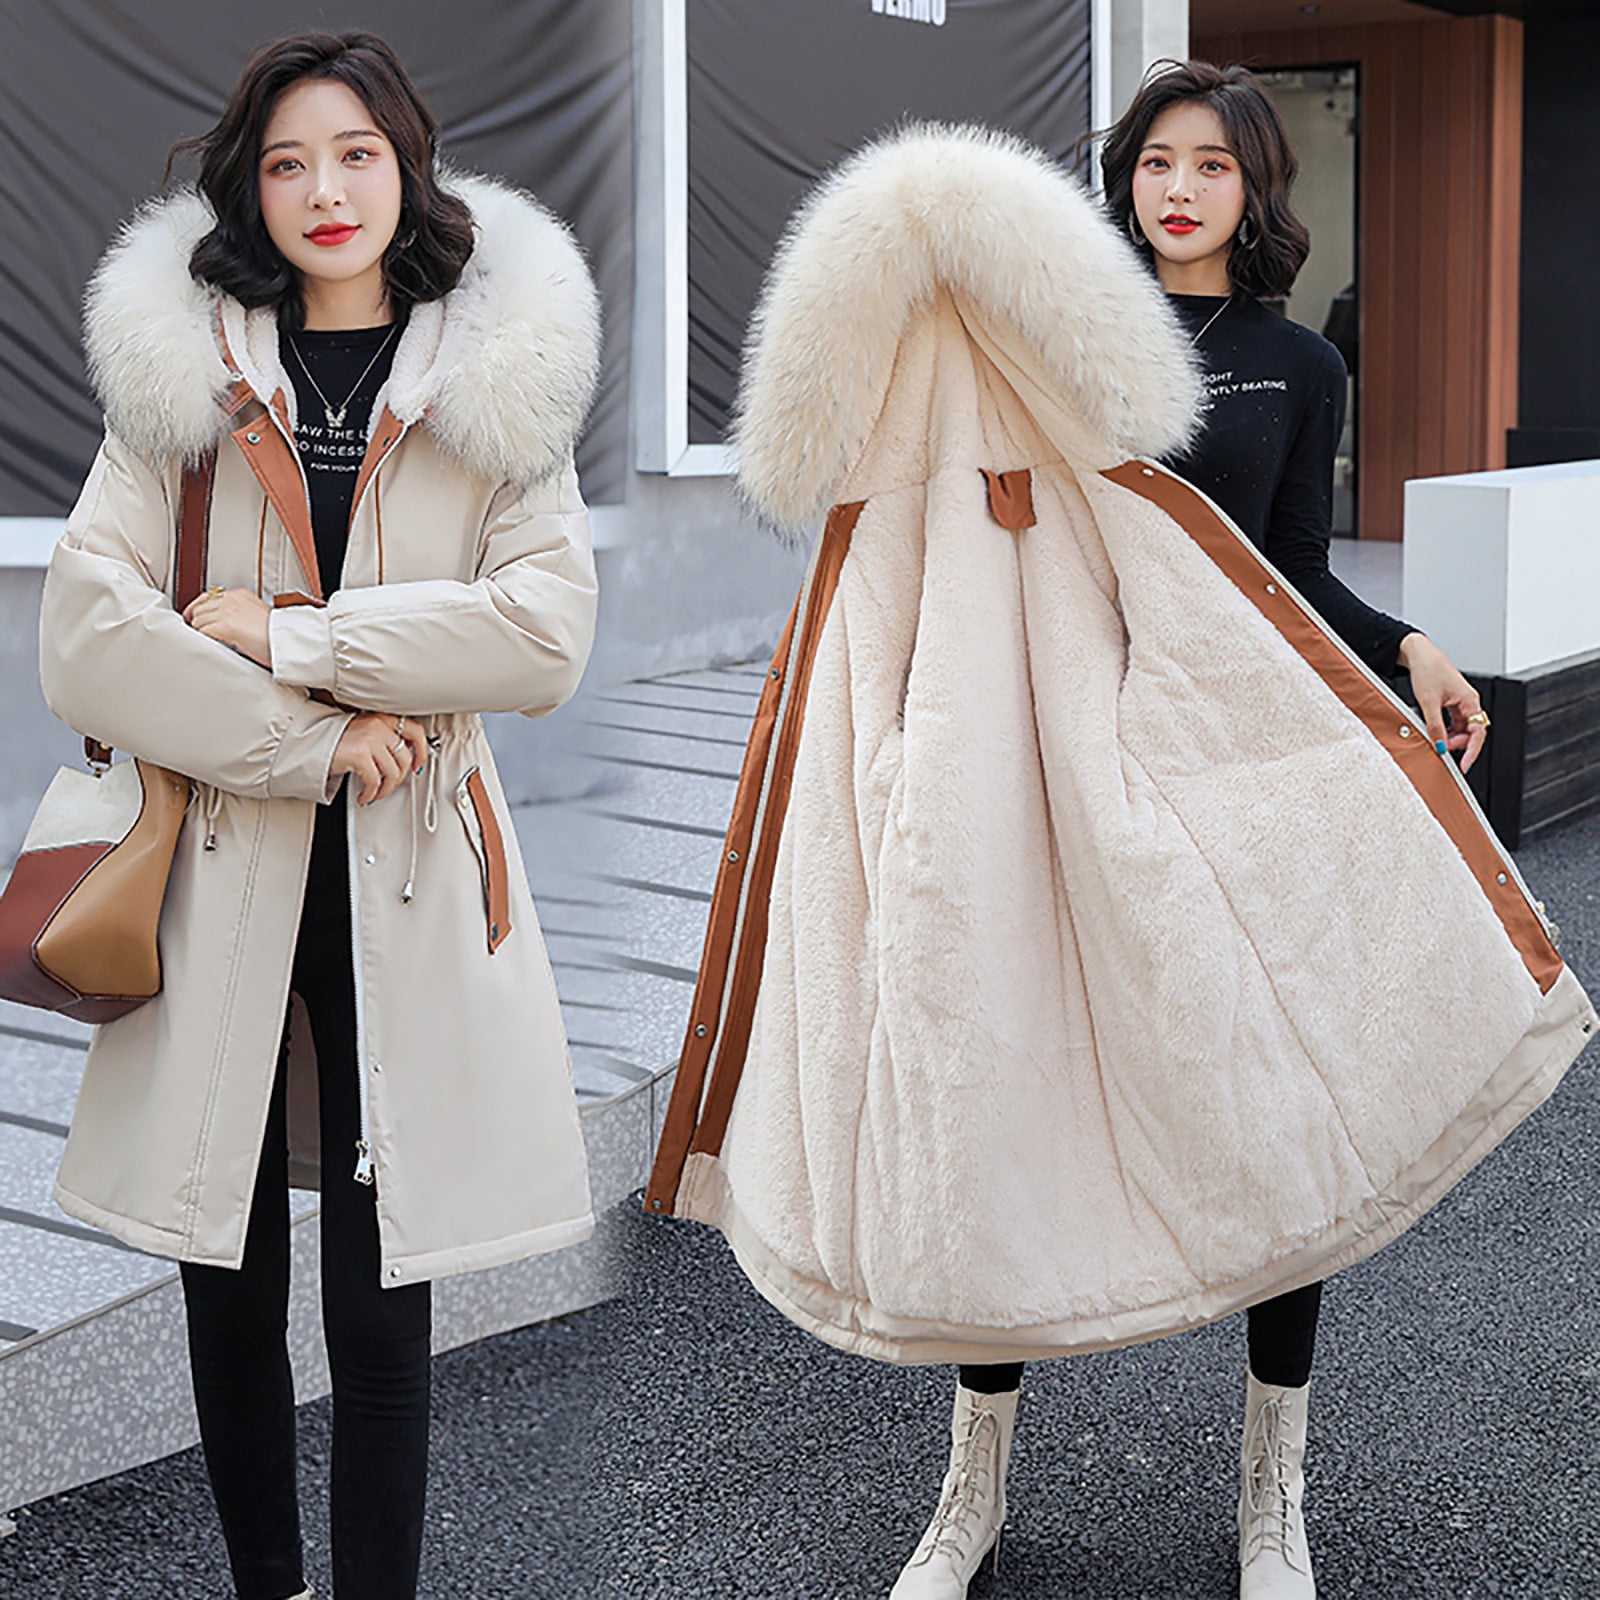  Plus Size Women's Winter Coats